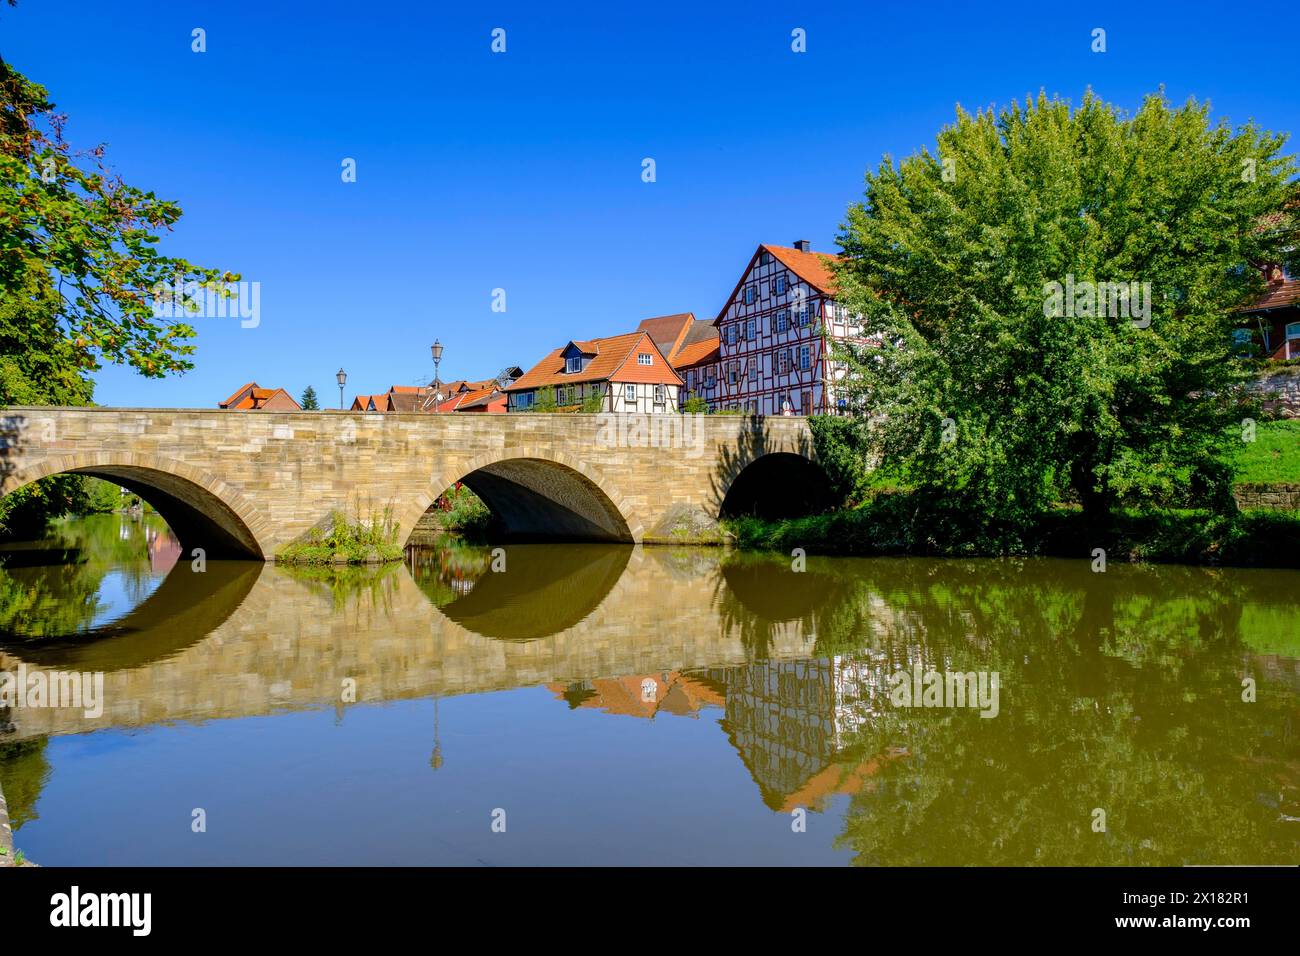 Bridge, on the Werra, Allendorf district, Bad Sooden-Allendorf, Werratal, Werra-Meissner district, Hesse, Germany Stock Photo